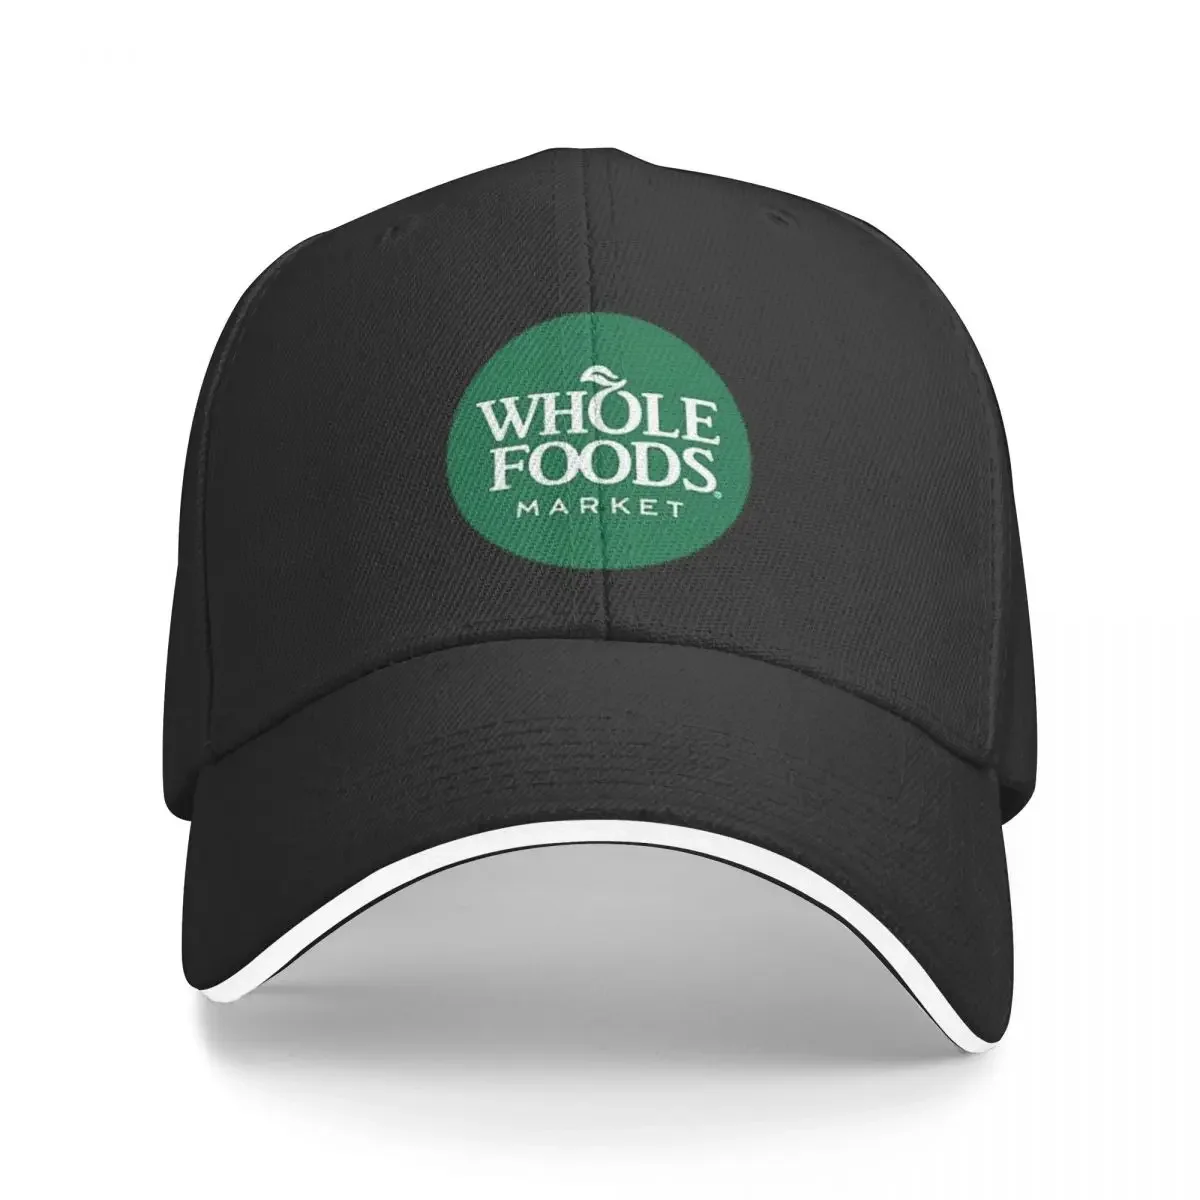 BEST SELLER Whole Foods Logo Cap Cap Fashion Casual Baseball Caps Adjustable Hat Hip Hop Summer Unisex Baseball Hats